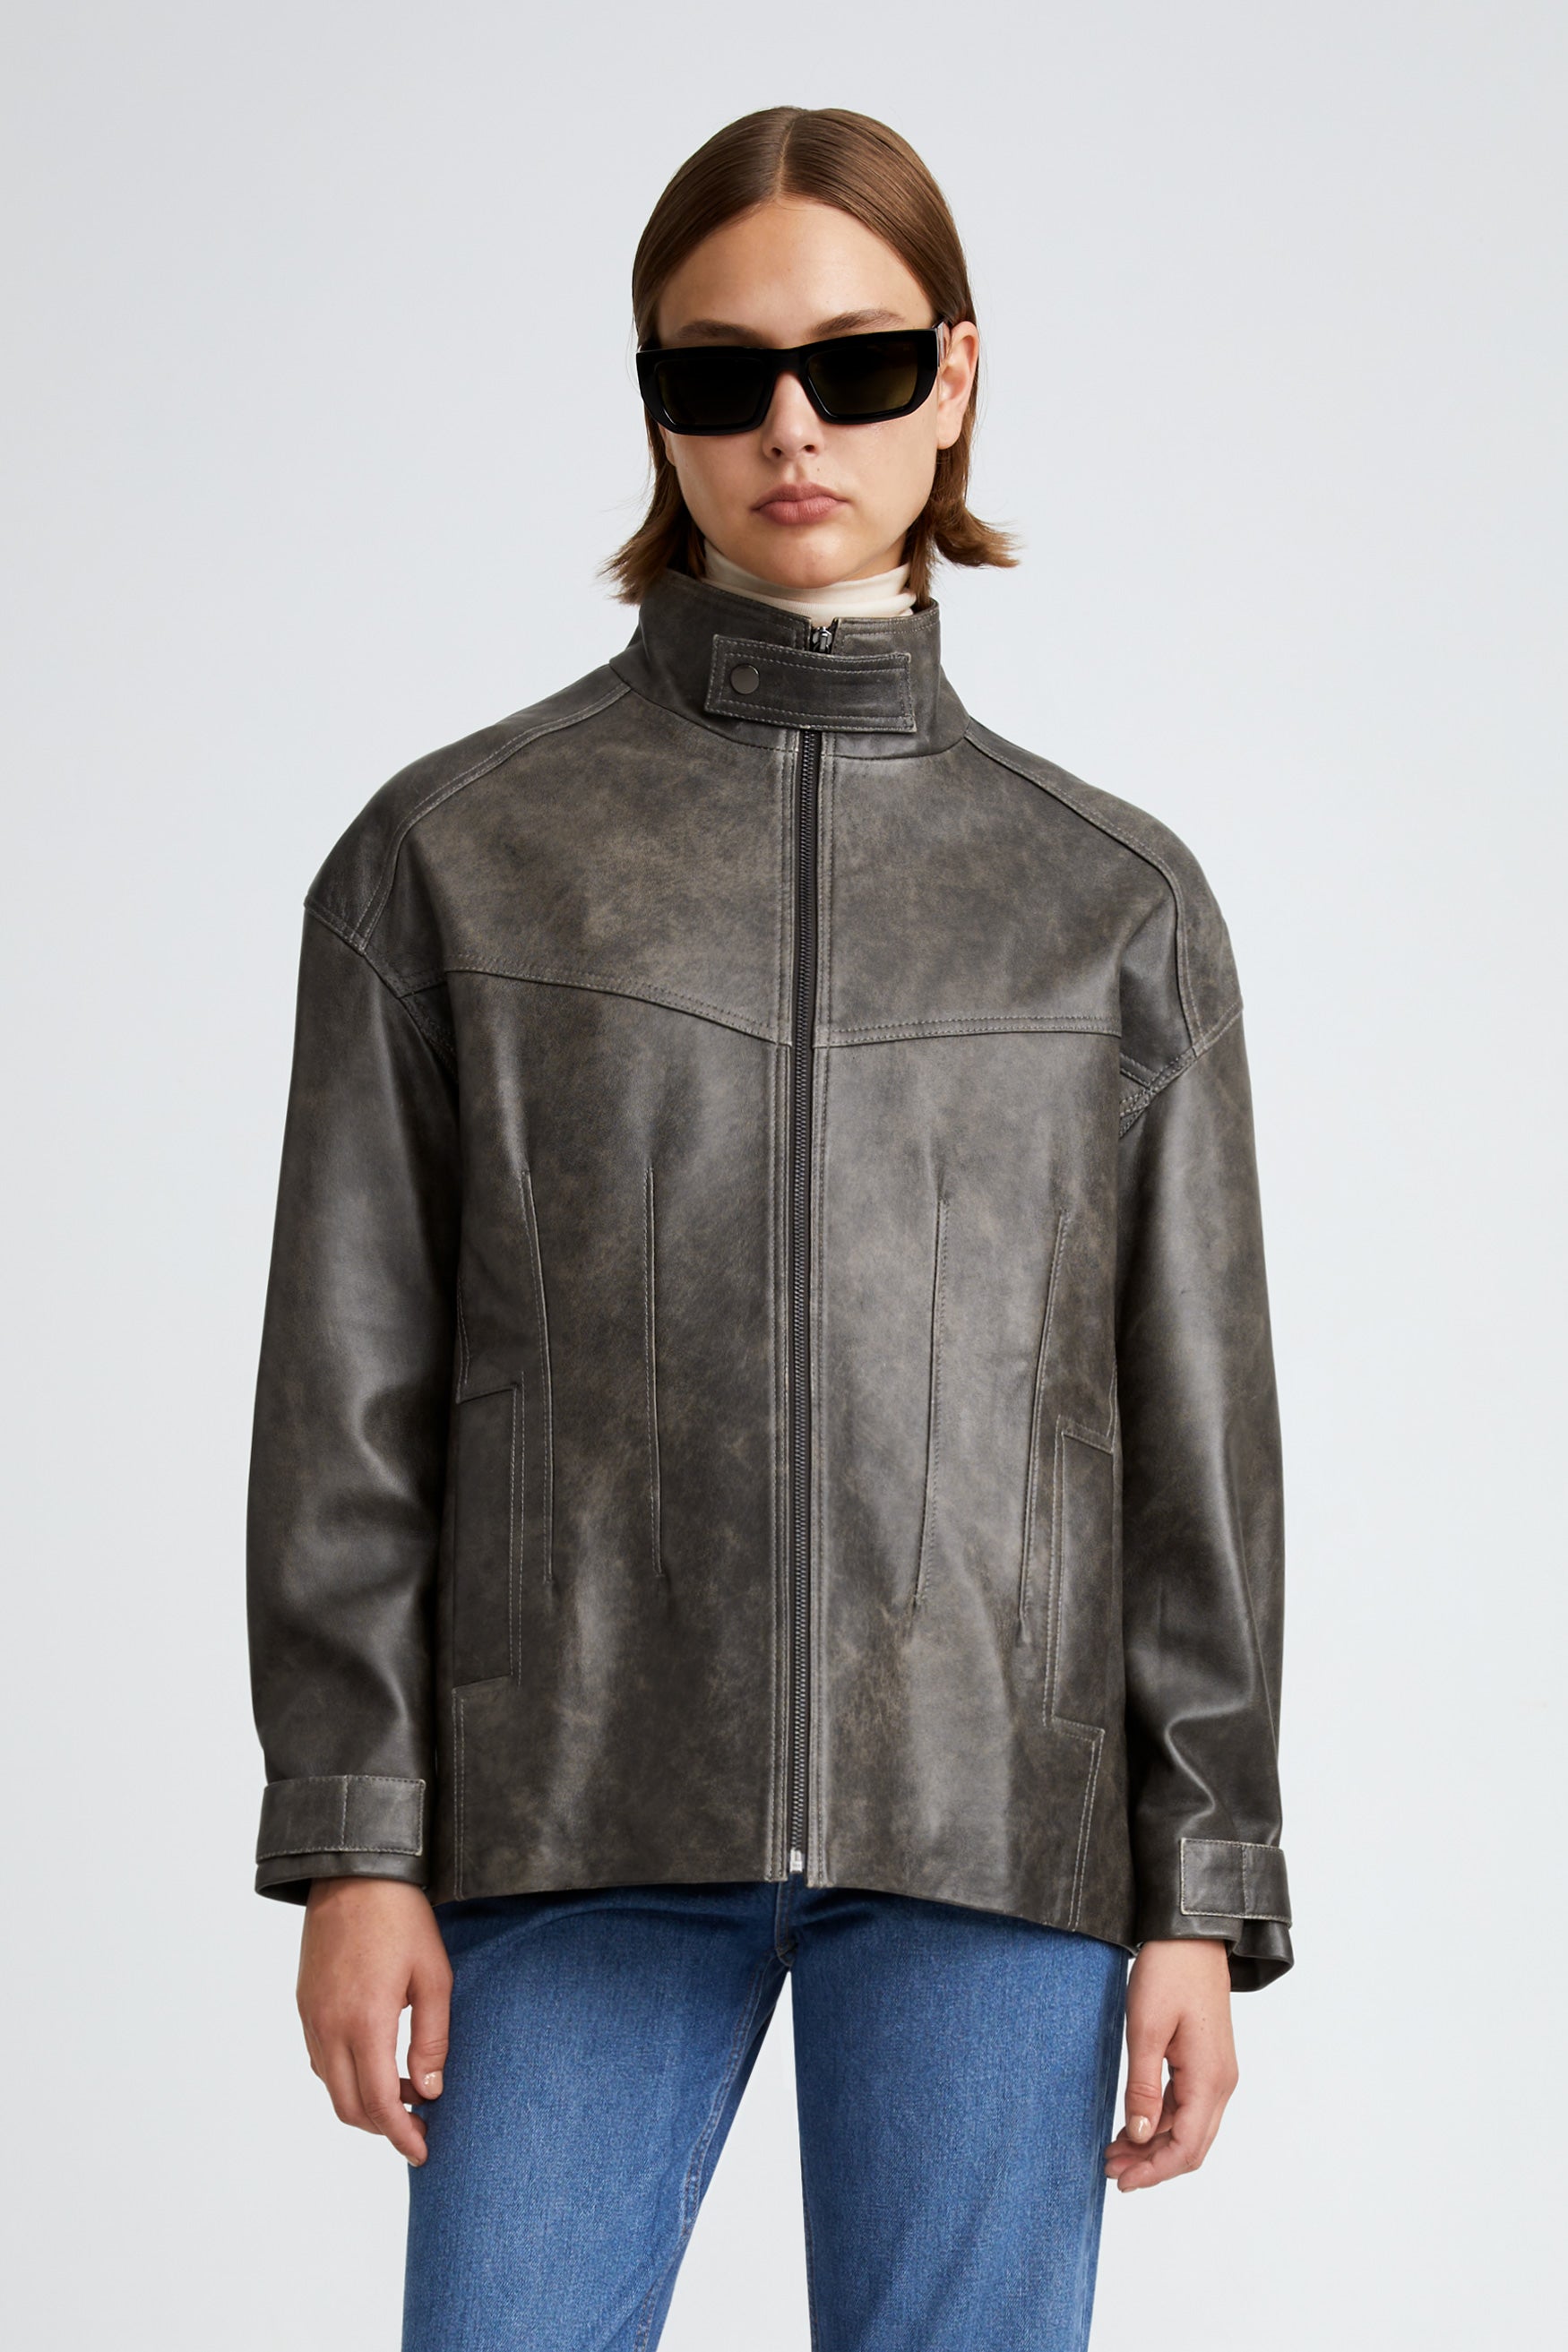 Leather denim jacket model RUE